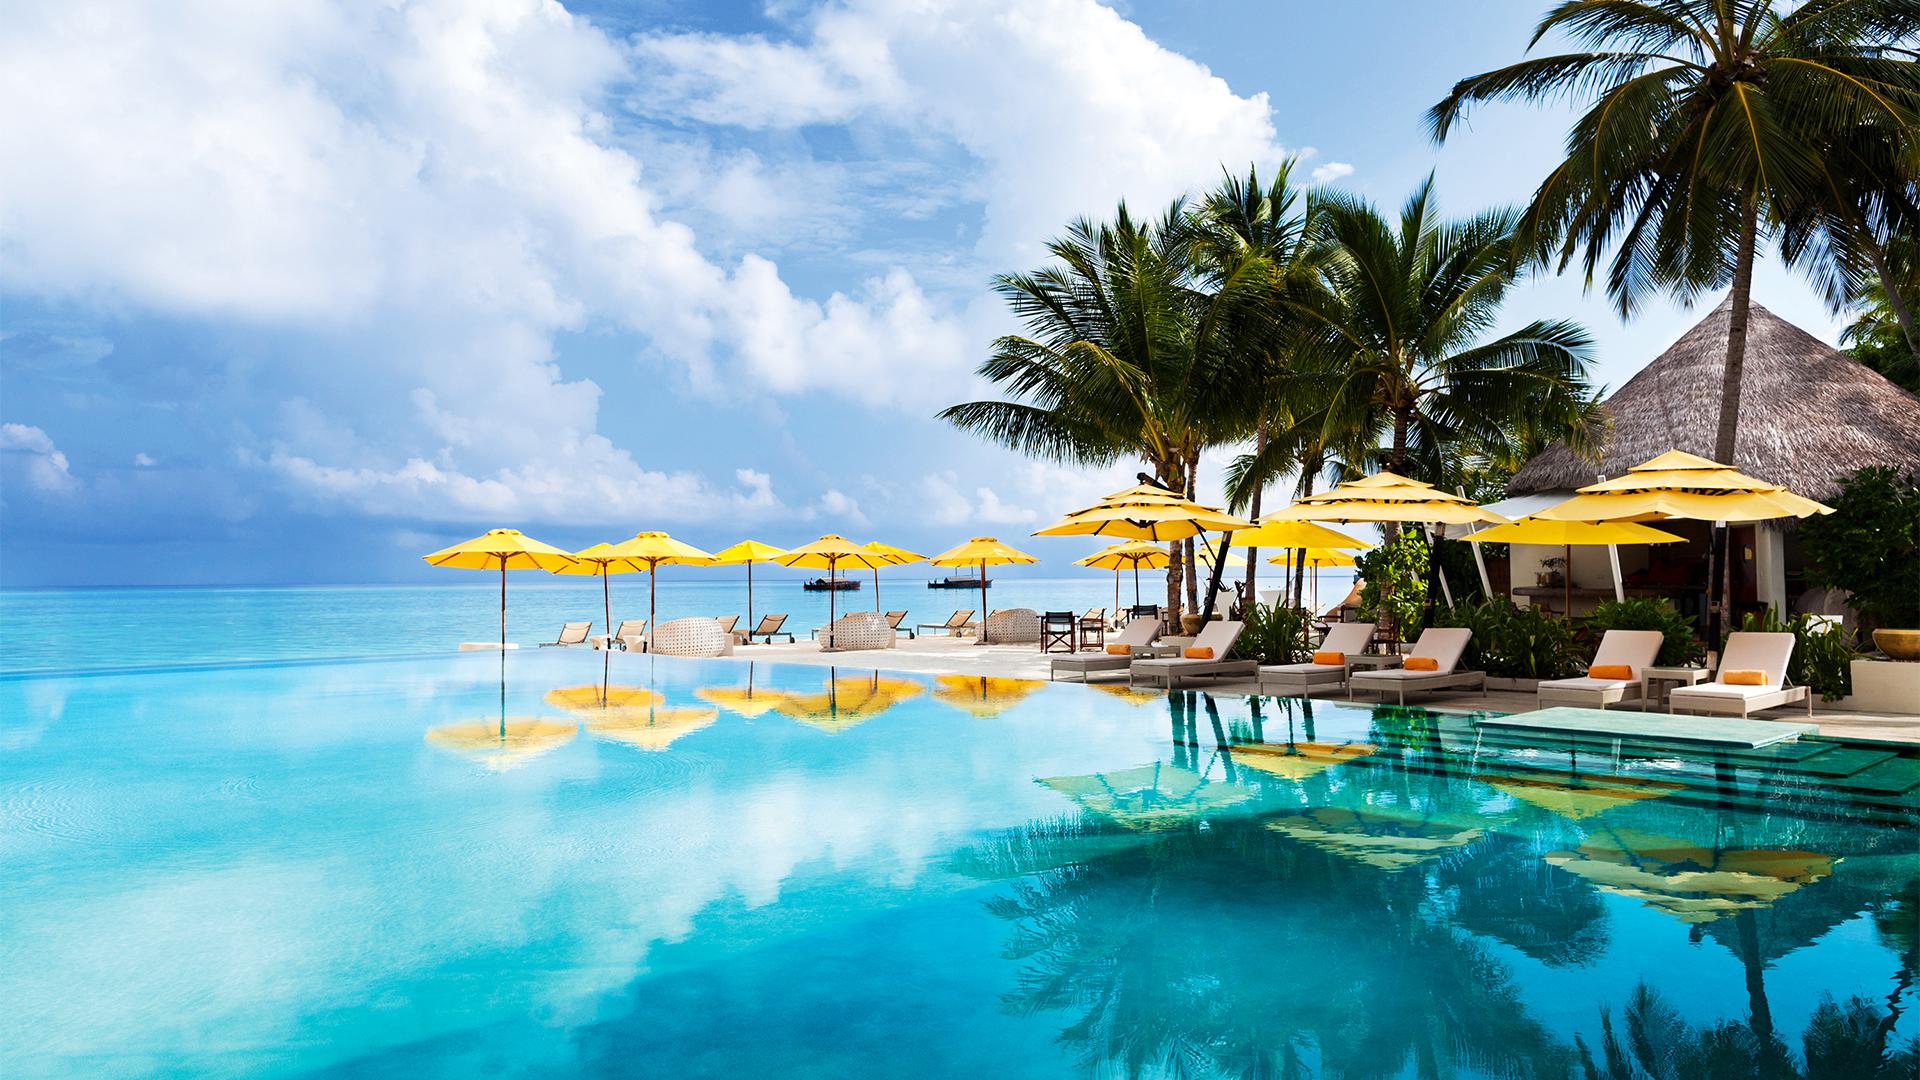 Three beautiful resorts in the Maldives  Square Mile